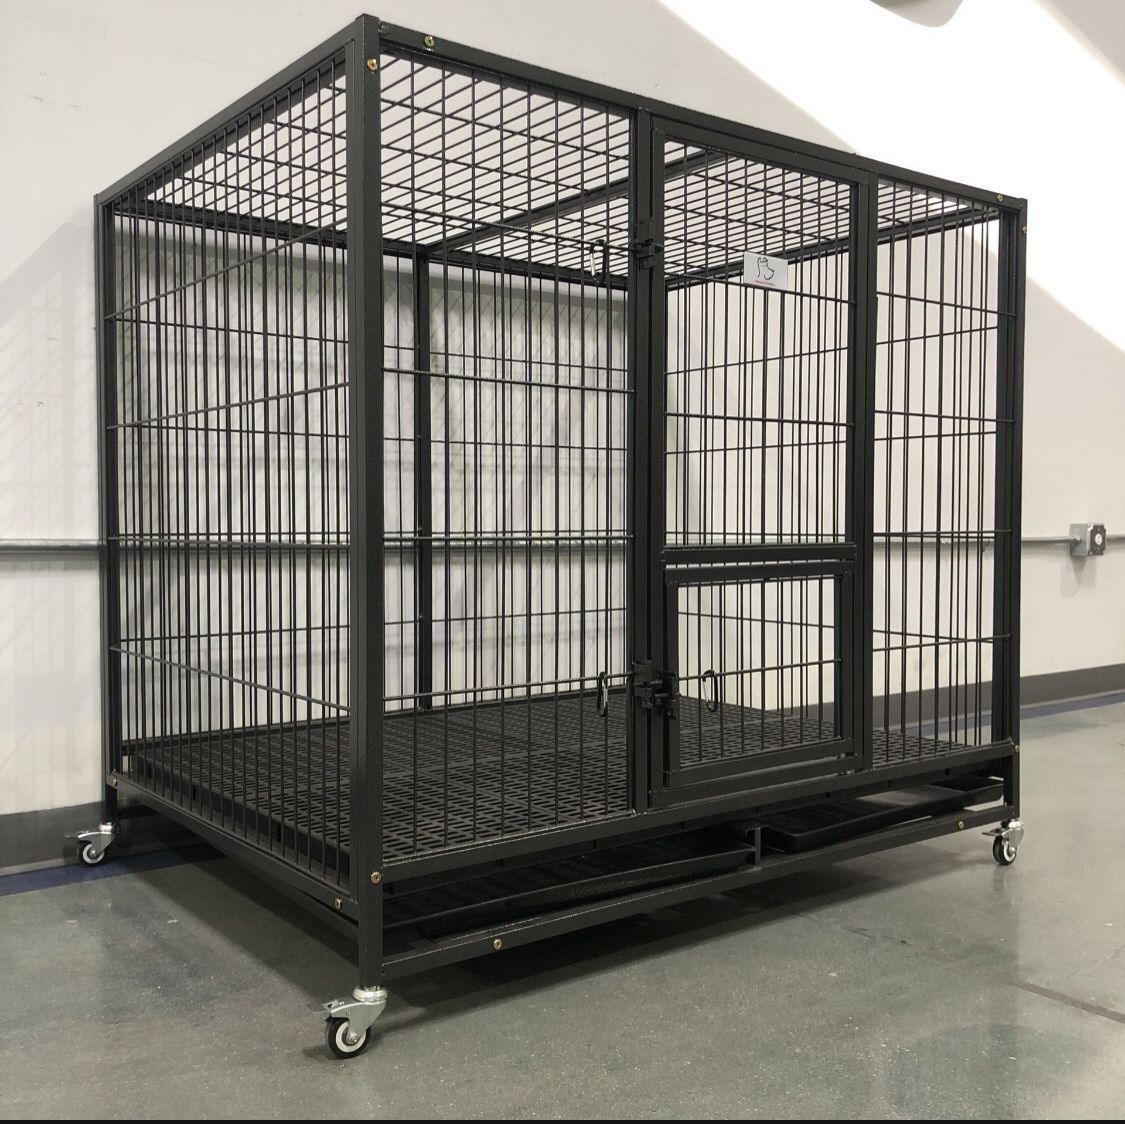 dog kennel /cage 